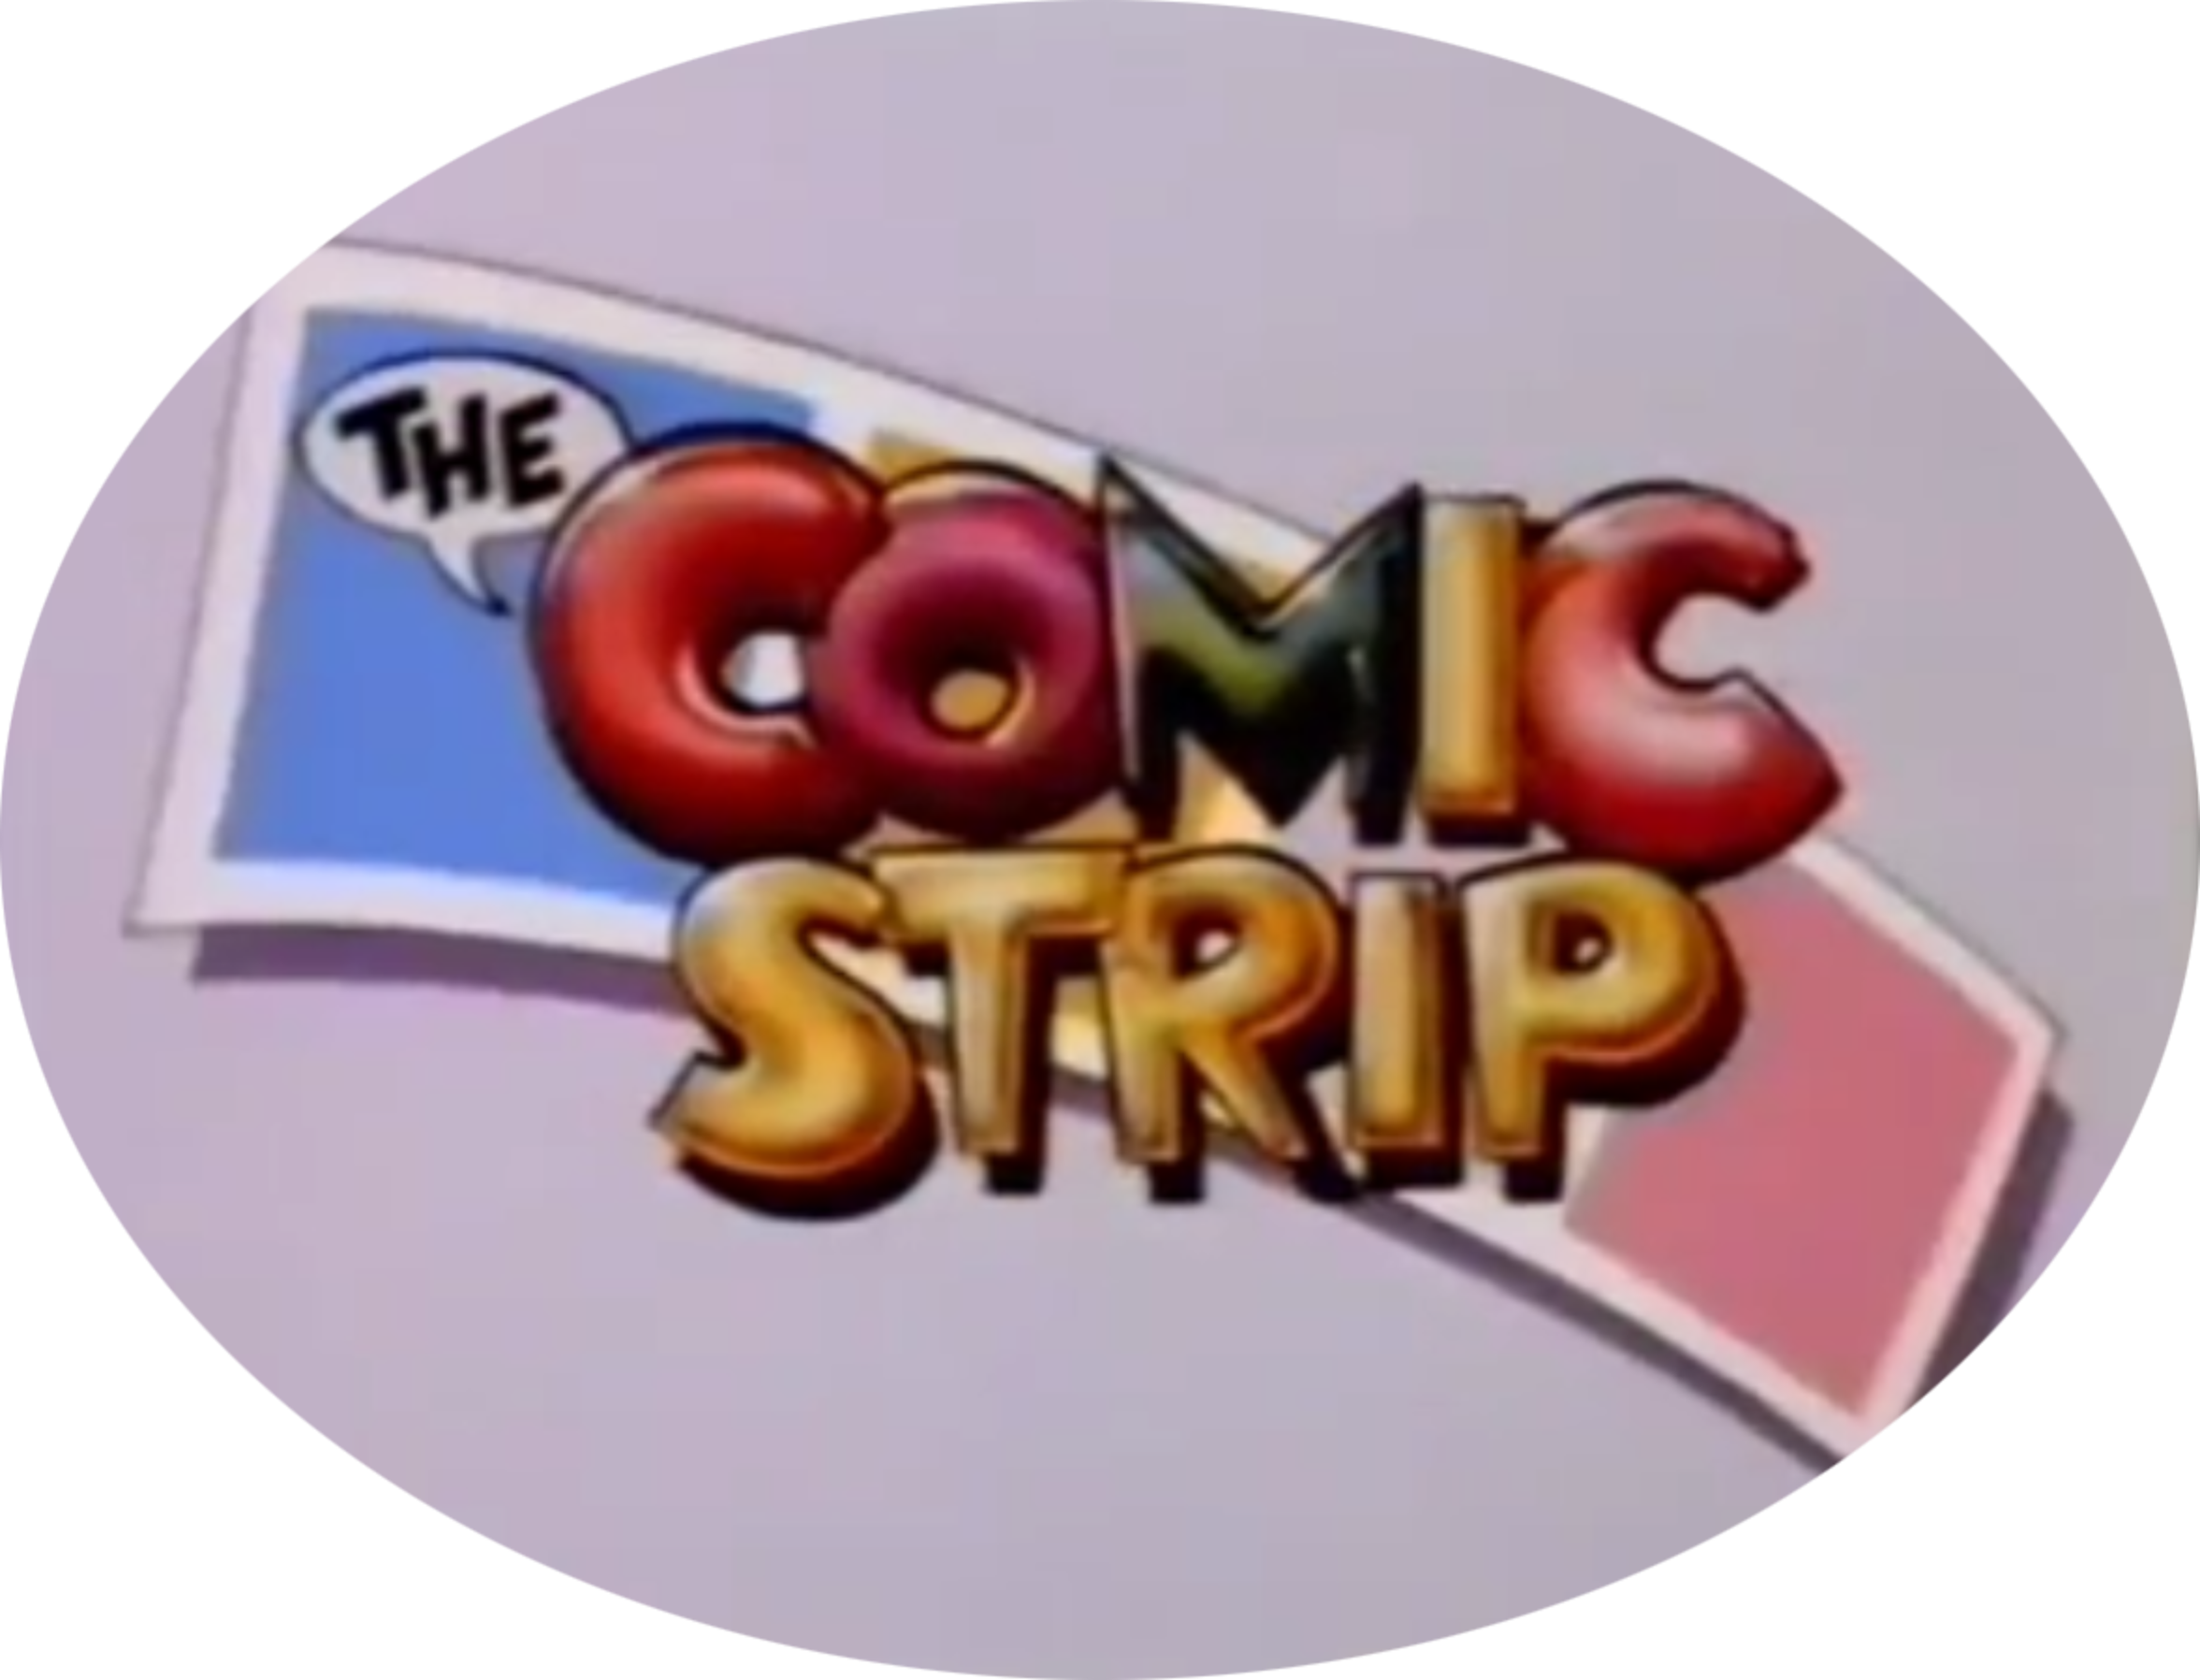 The Comic Strip Complete (1 DVD Box Set)